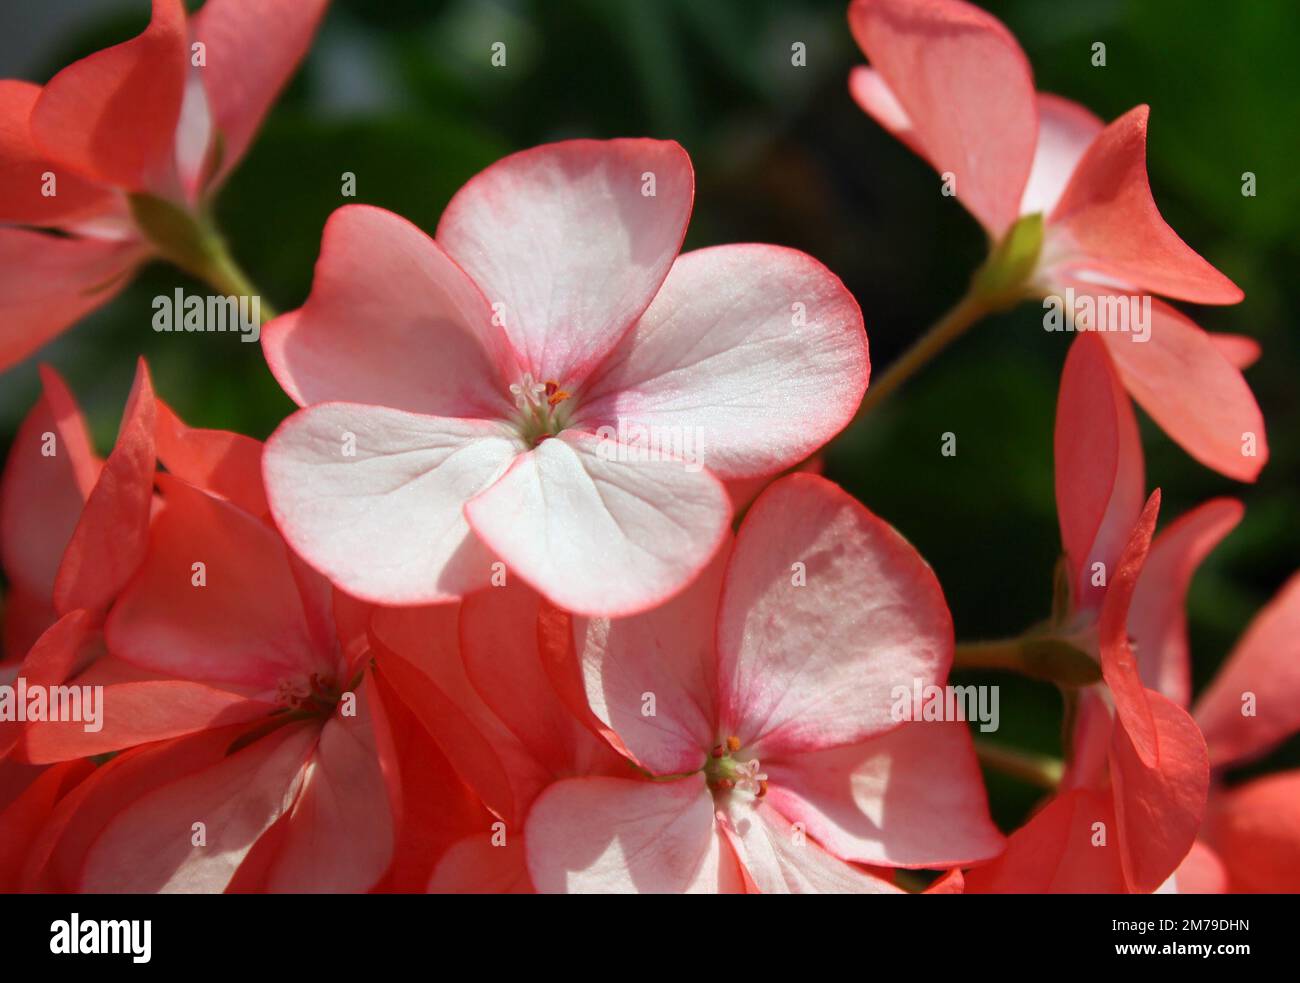 The delicate petals of a flowering Geranium plant Stock Photo